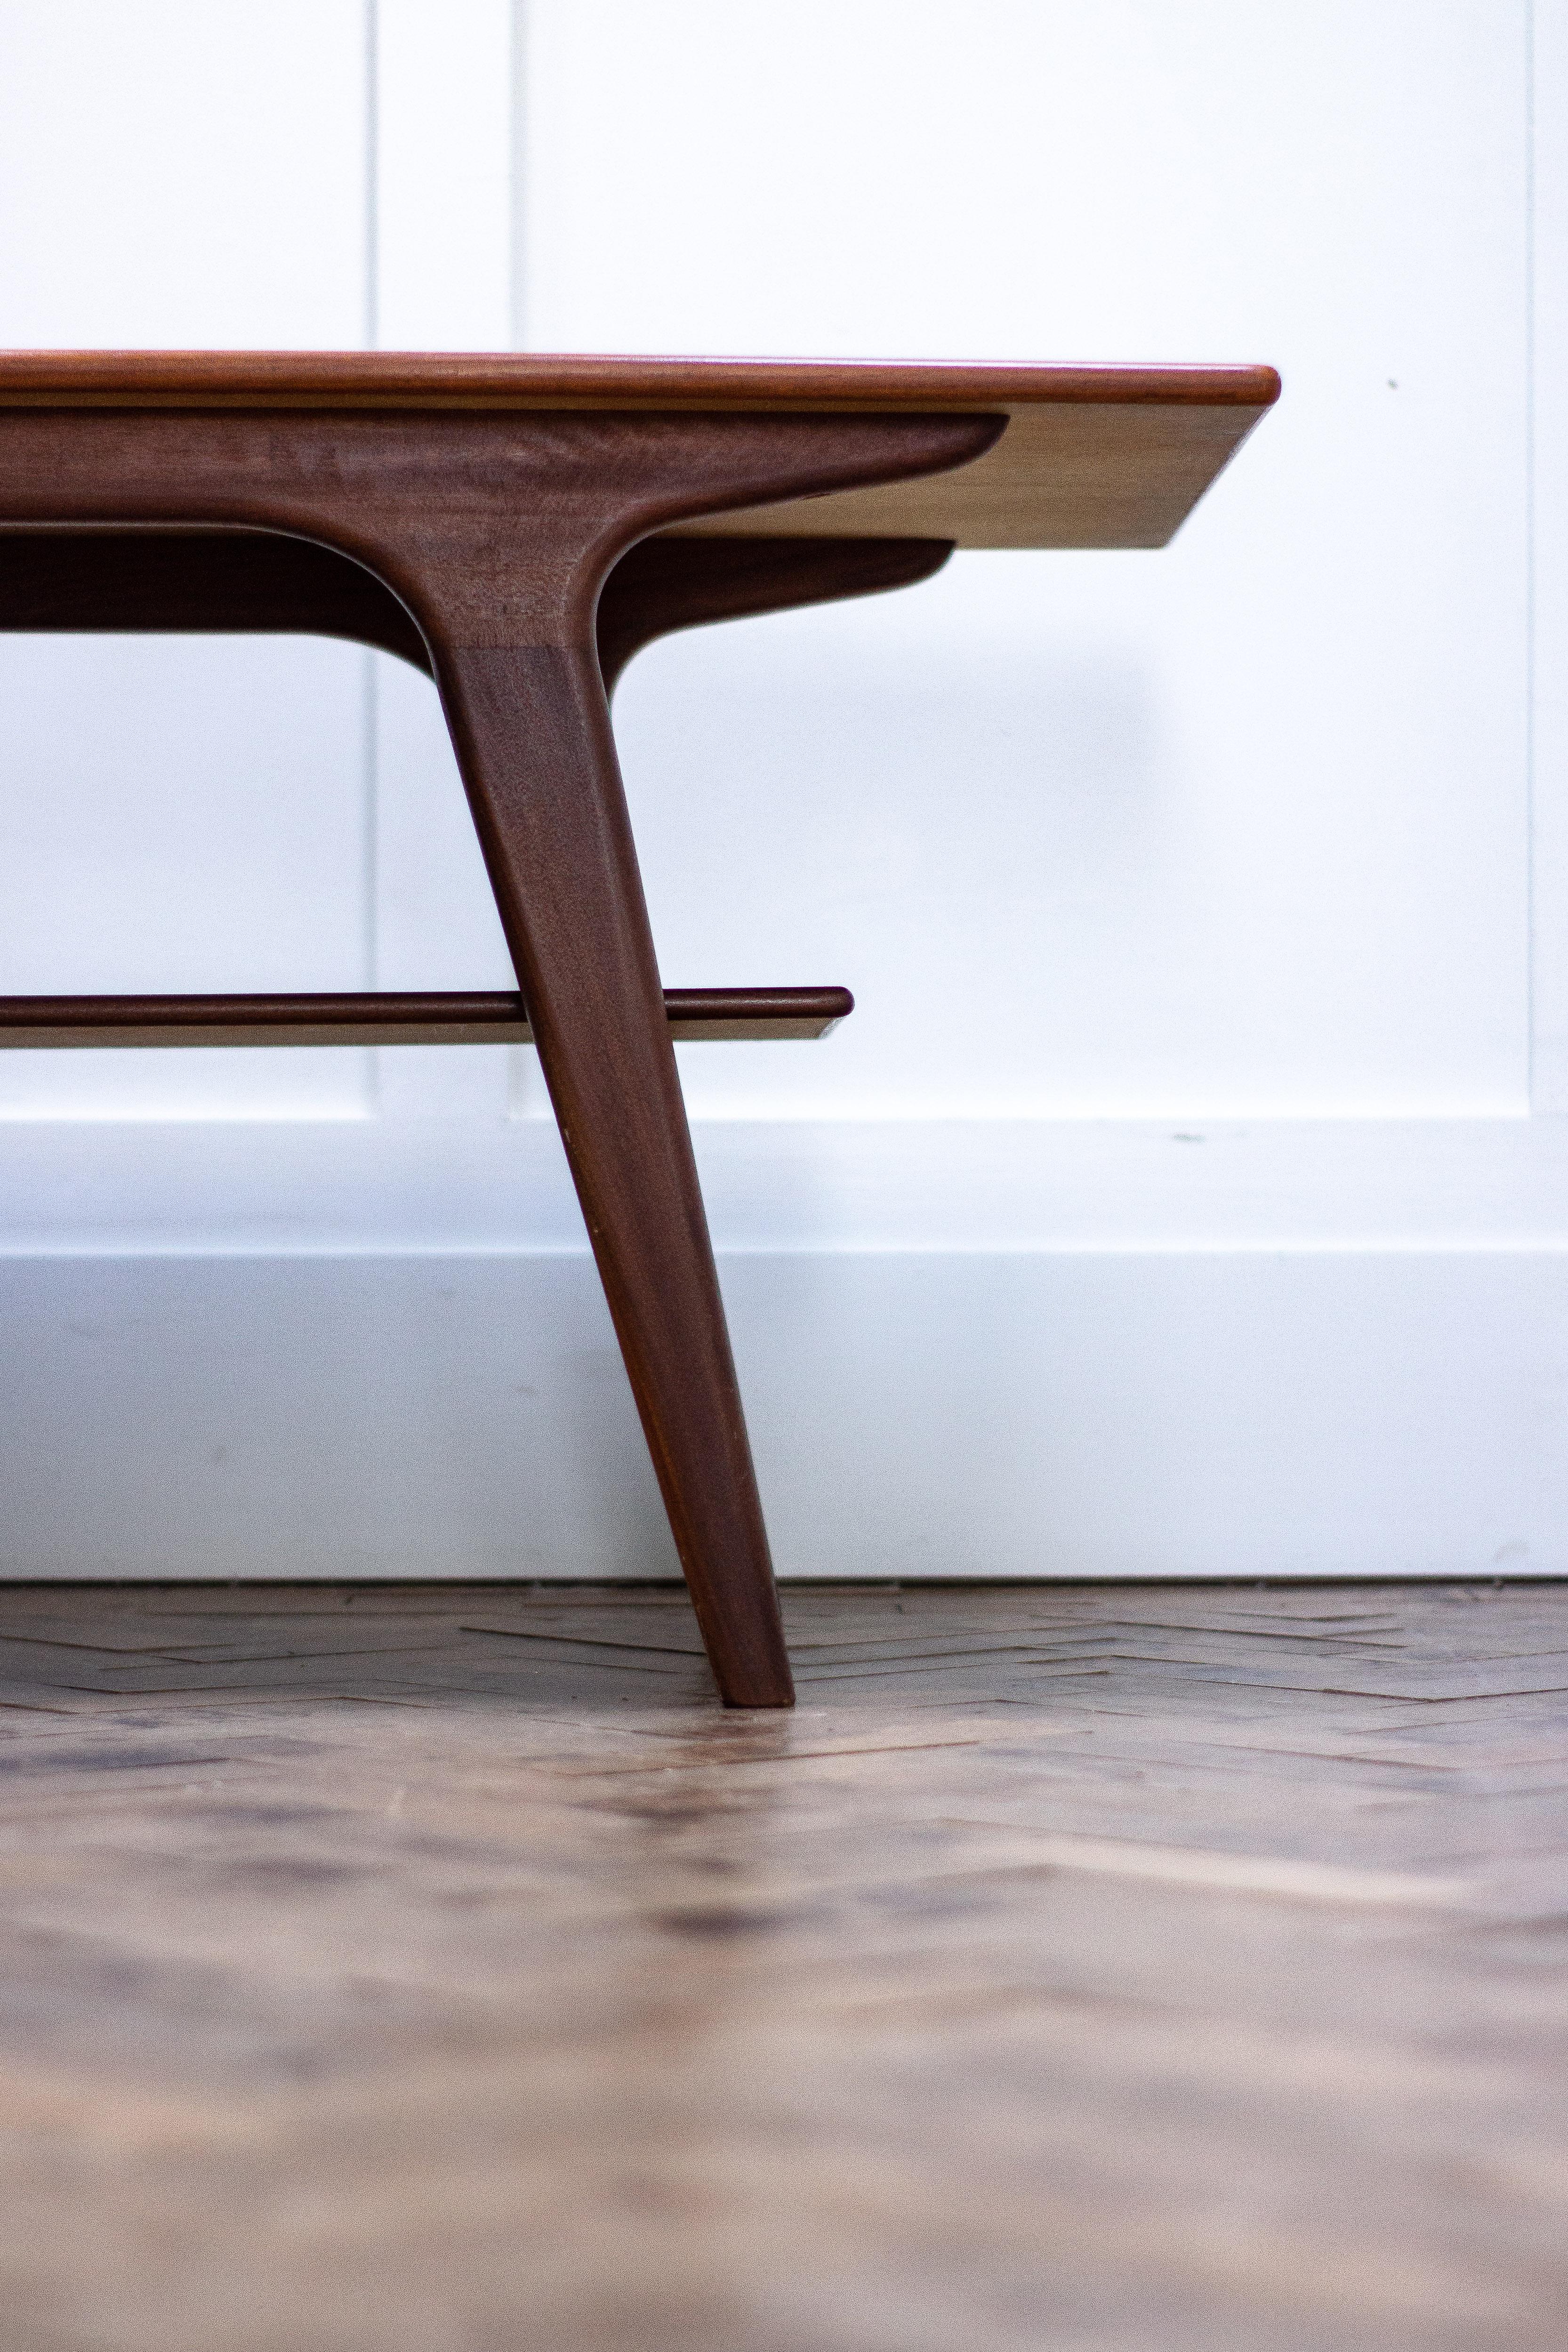 Danish modern coffee table in teak with splayed legs and single shelf, 1960s.

Measures: Height 54cm
Length 150cm
Depth 55cm.